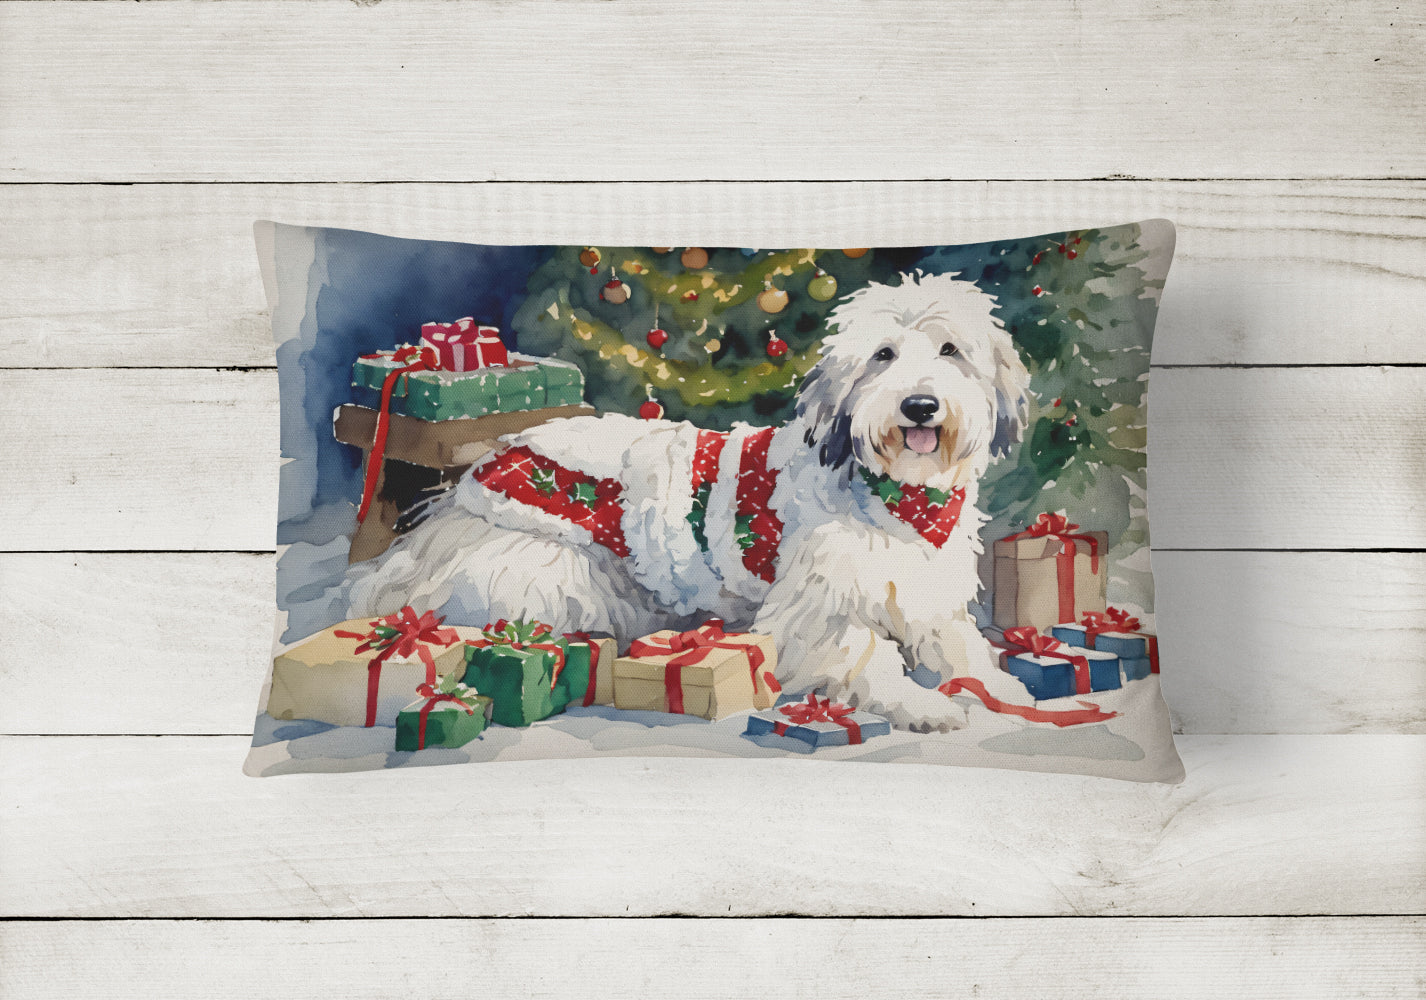 Buy this Old English Sheepdog Cozy Christmas Throw Pillow